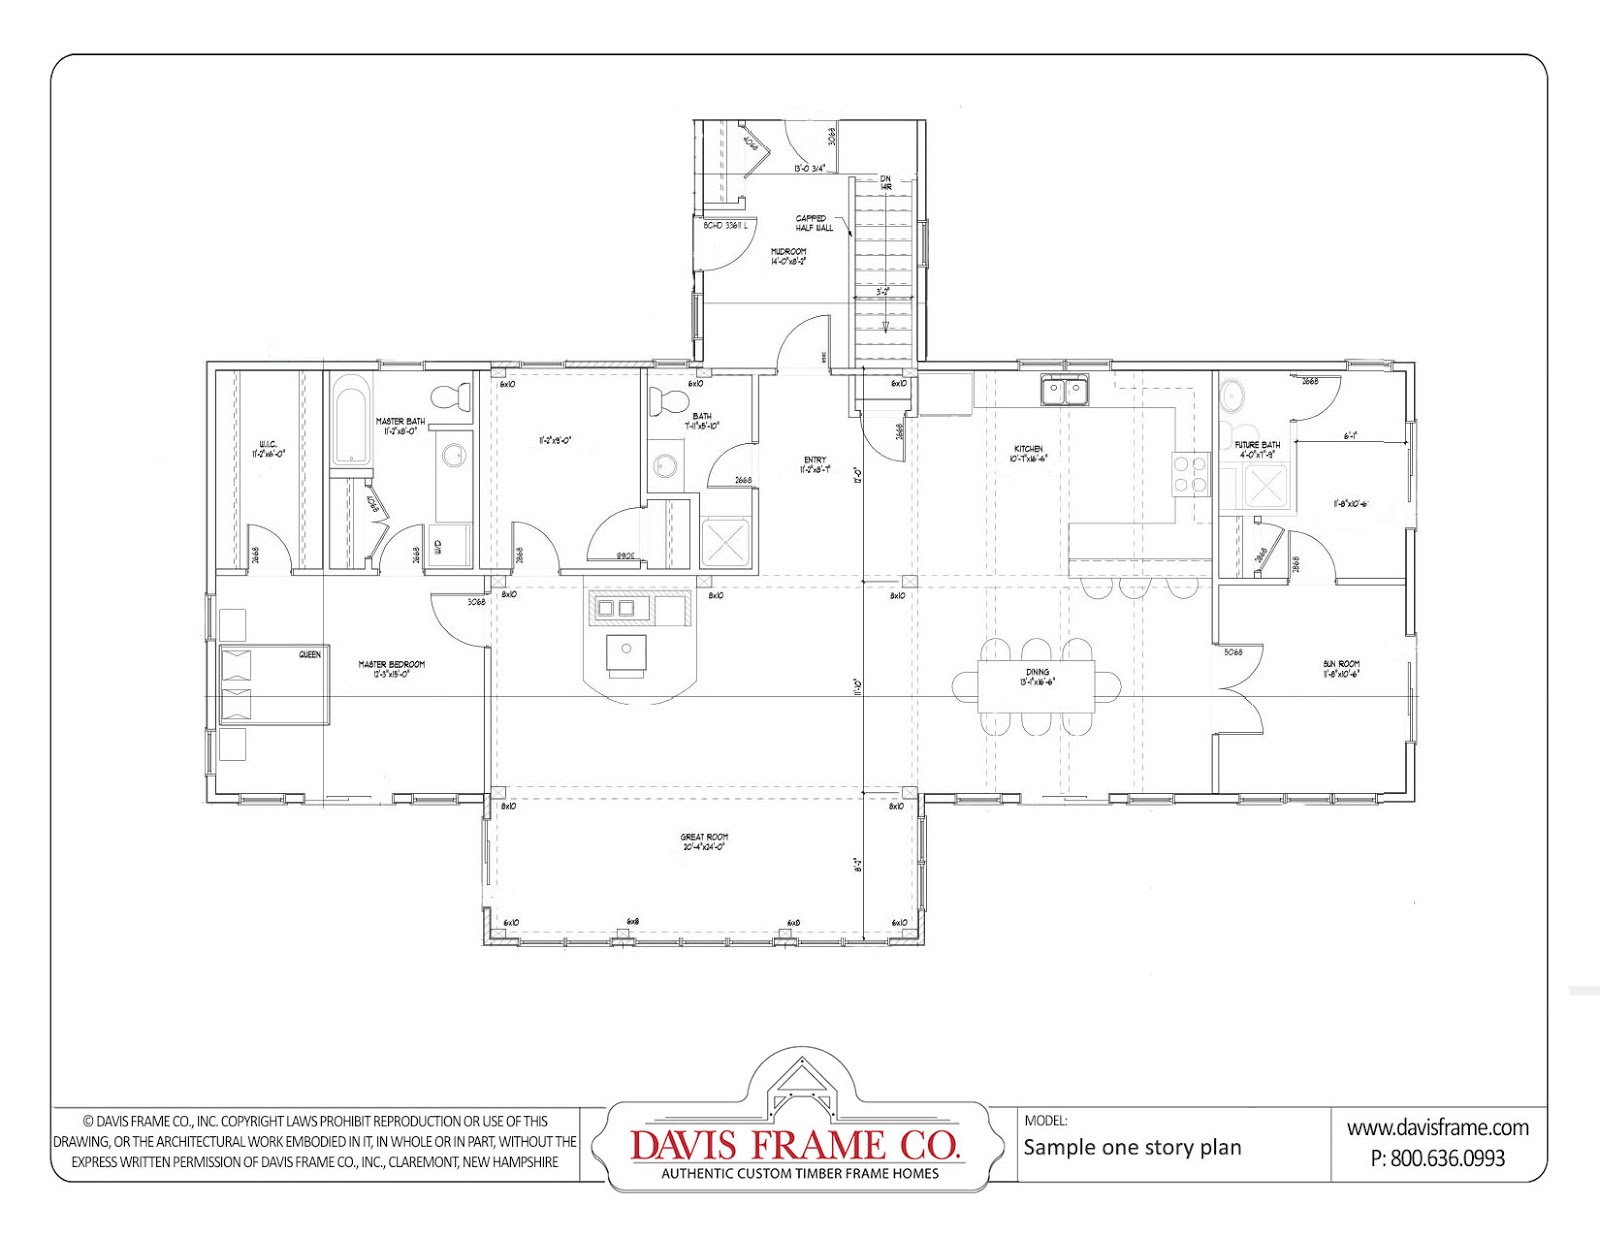 12 Stunning Story  Planning Frame  Home  Plans  Blueprints 